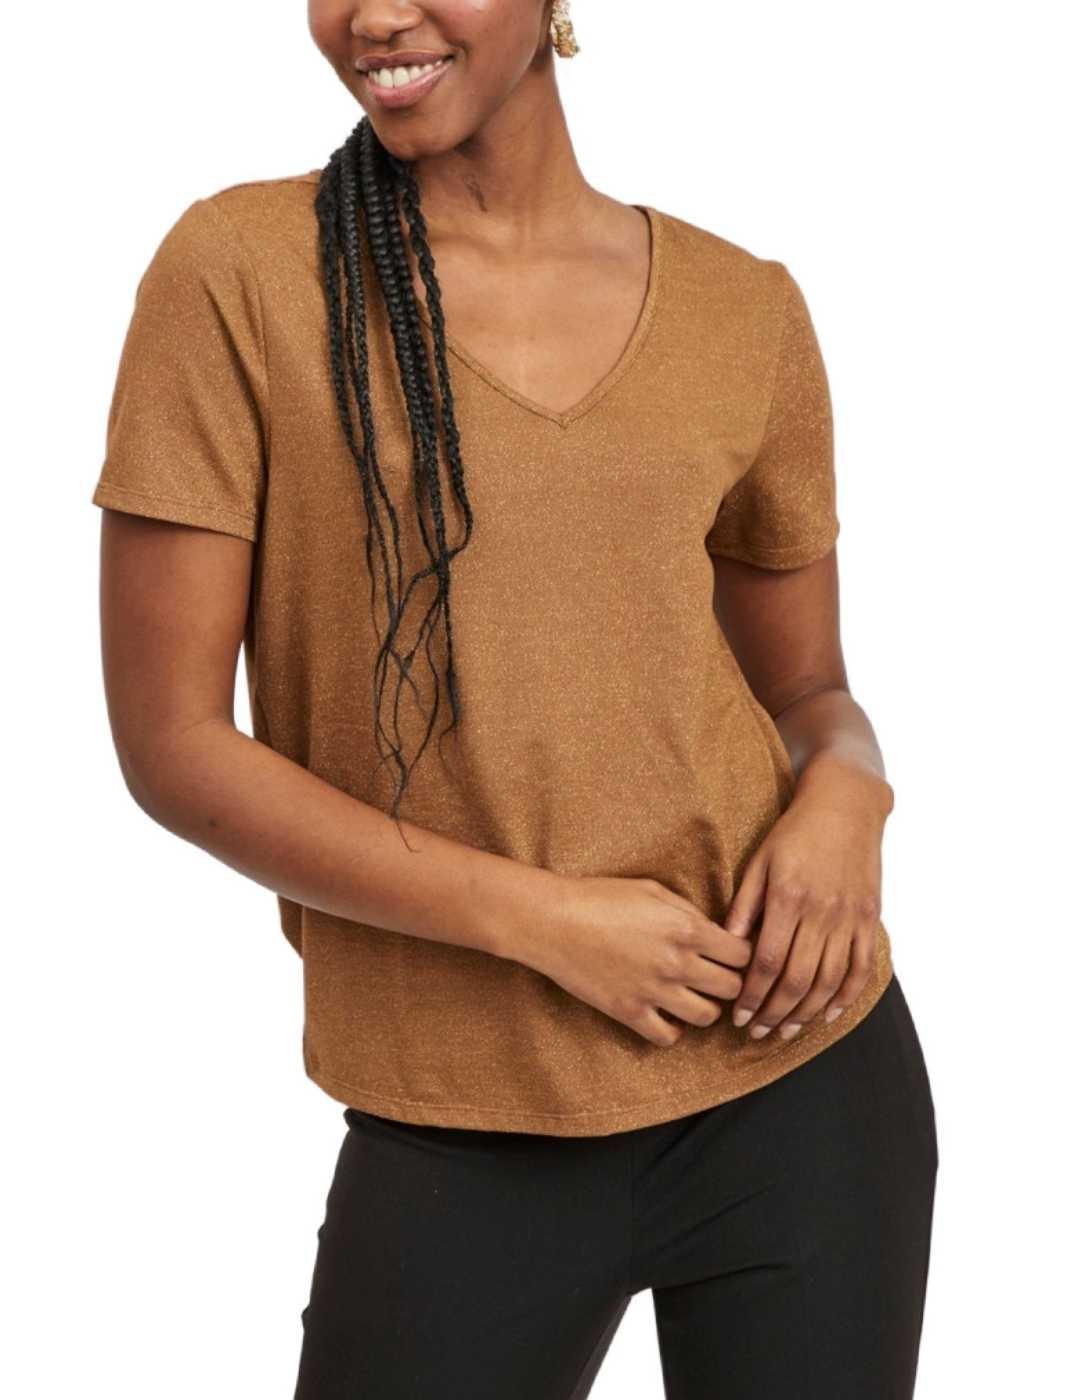 Camiseta Vila dorada cuello pico manga corta para mujer